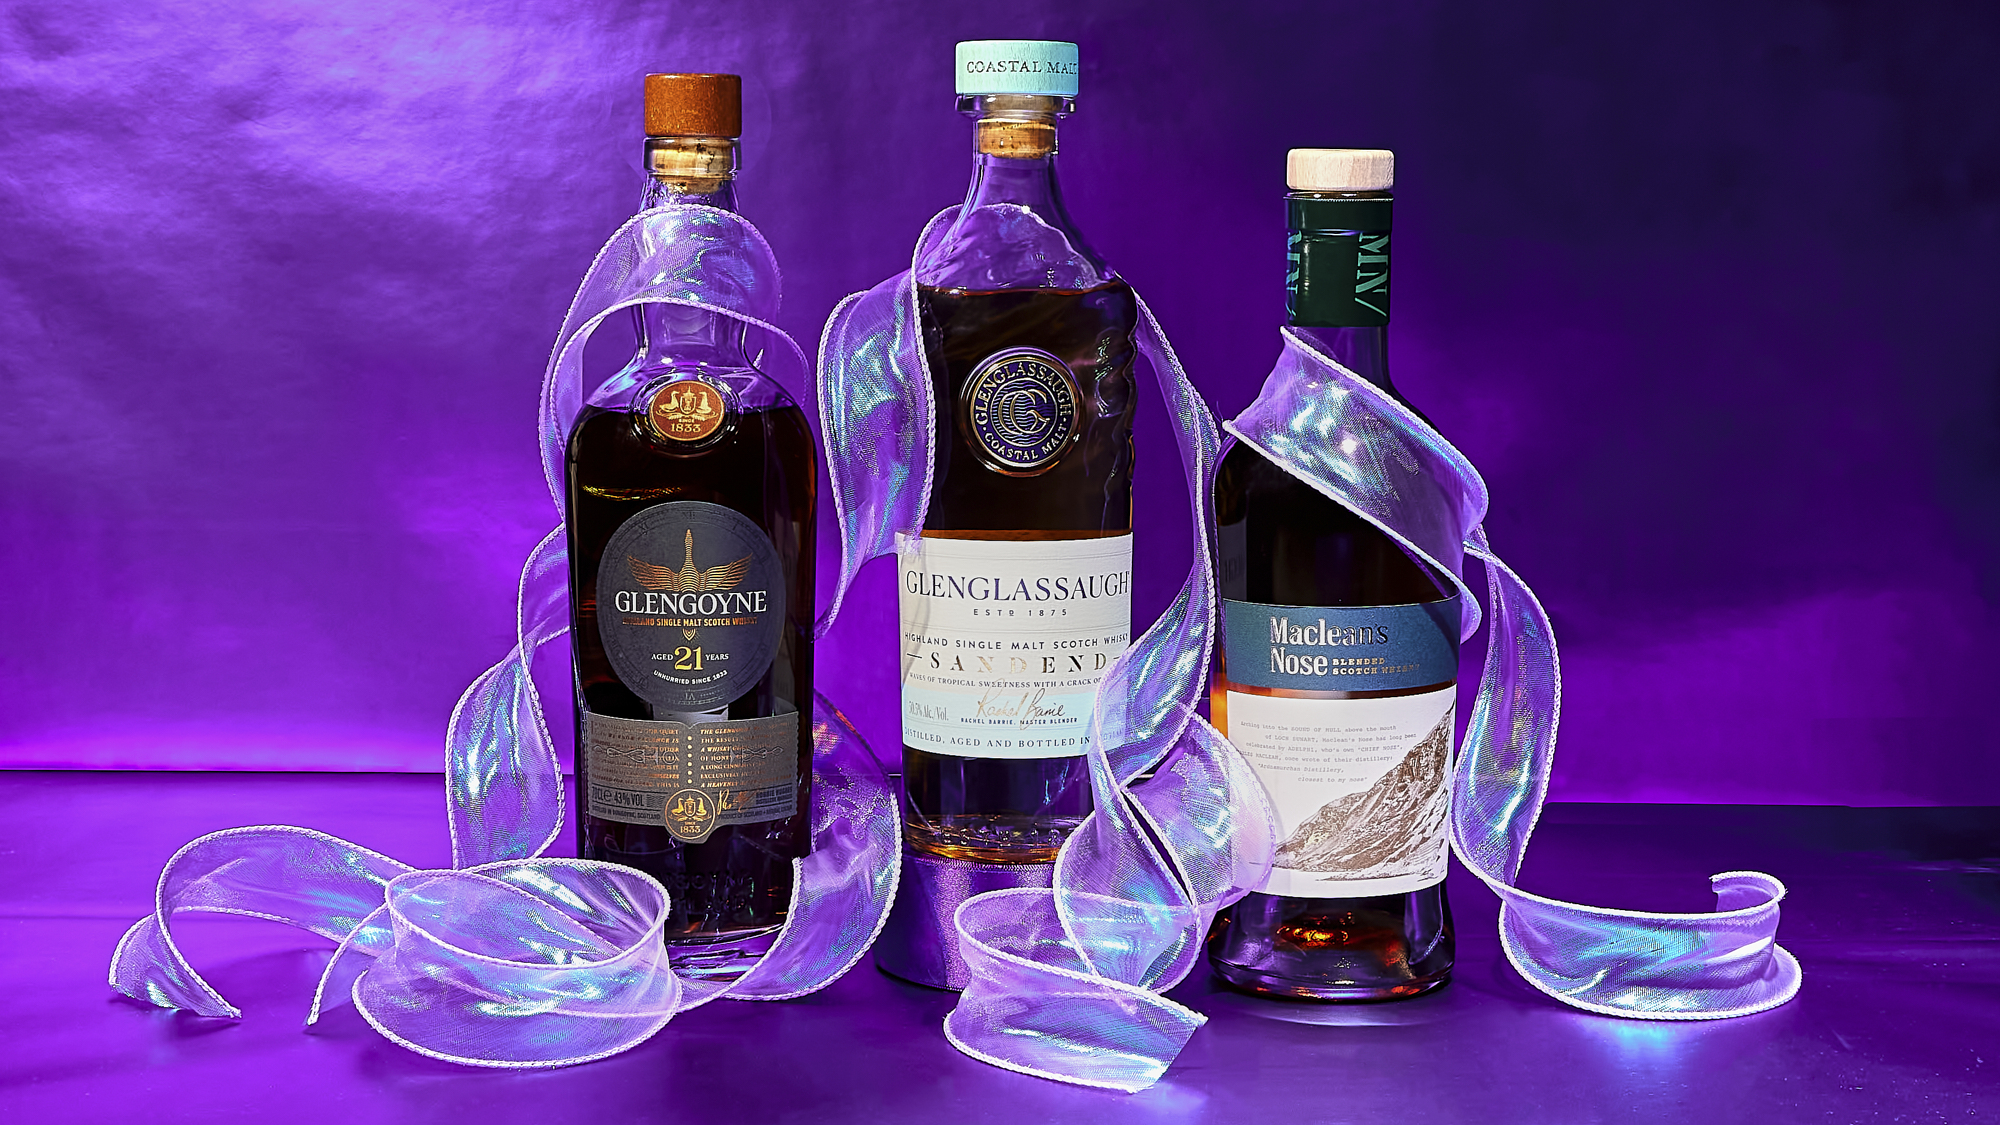 Glenglassaugh Sandend - Passion for Whisky